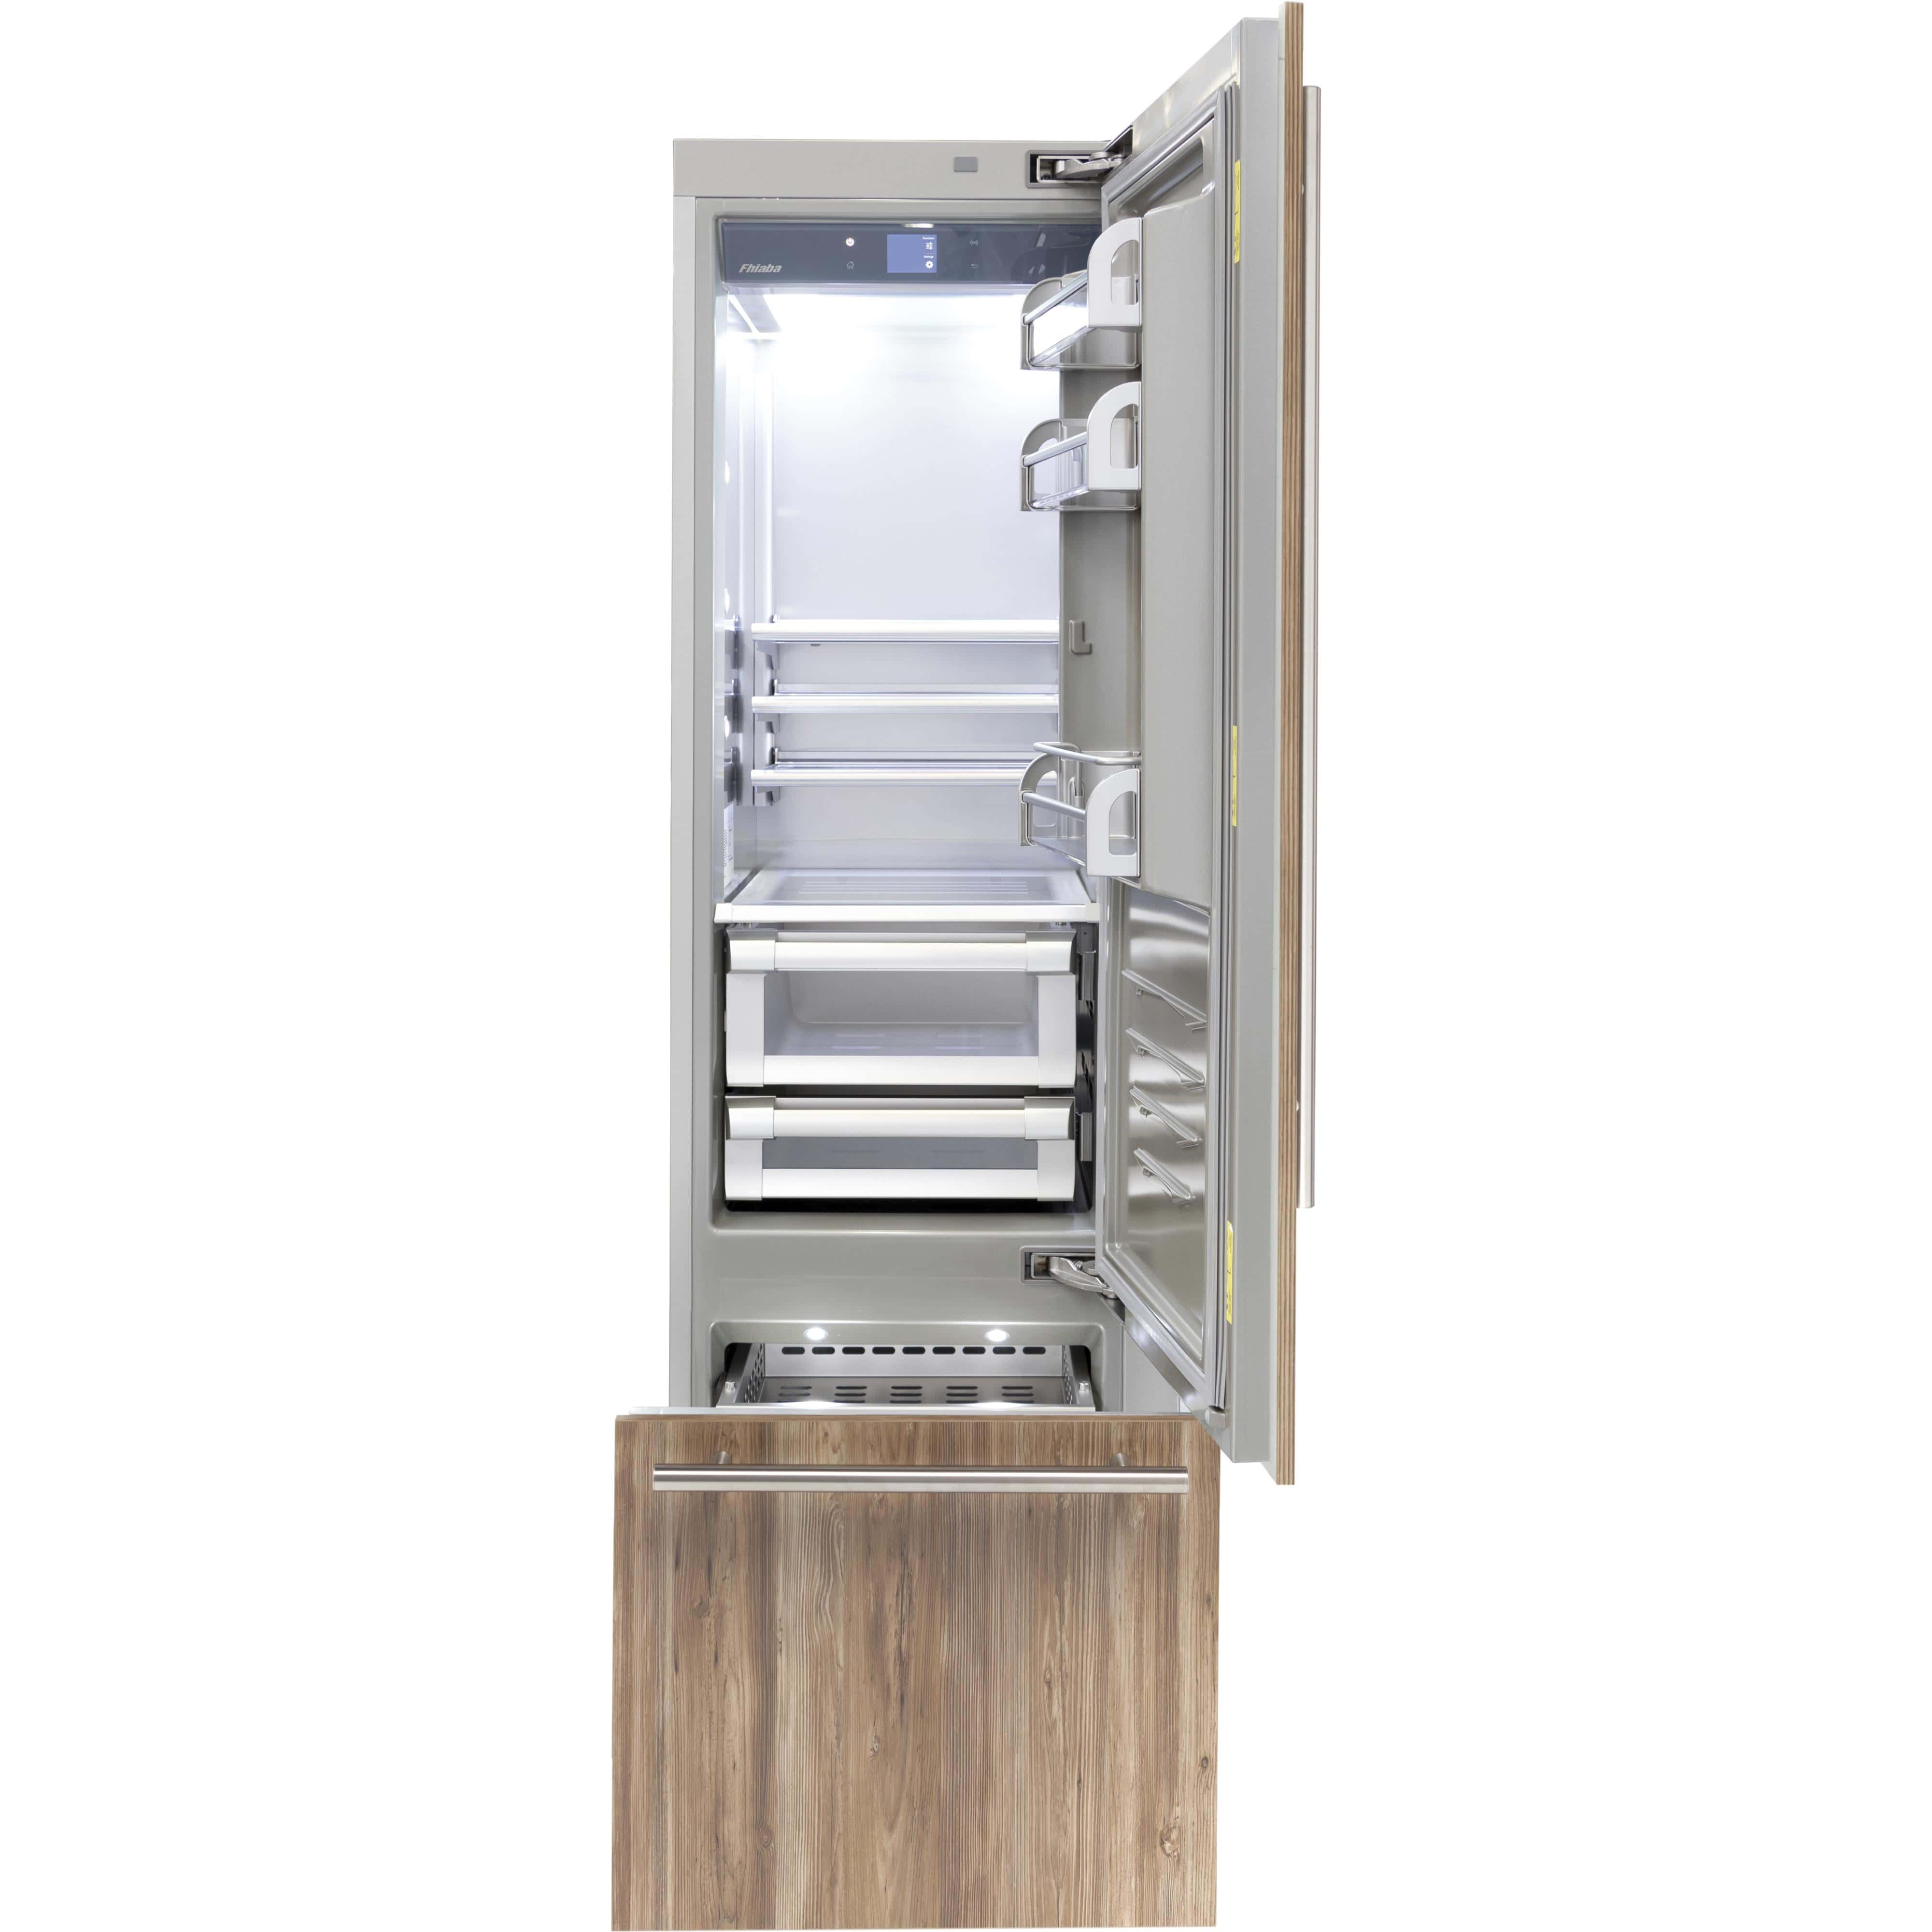 Fhiaba 24-inch, 11.58 cu. ft. Bottom Freezer Refrigerator FI24B-RO1 Refrigerators FI24BRO1 Luxury Appliances Direct